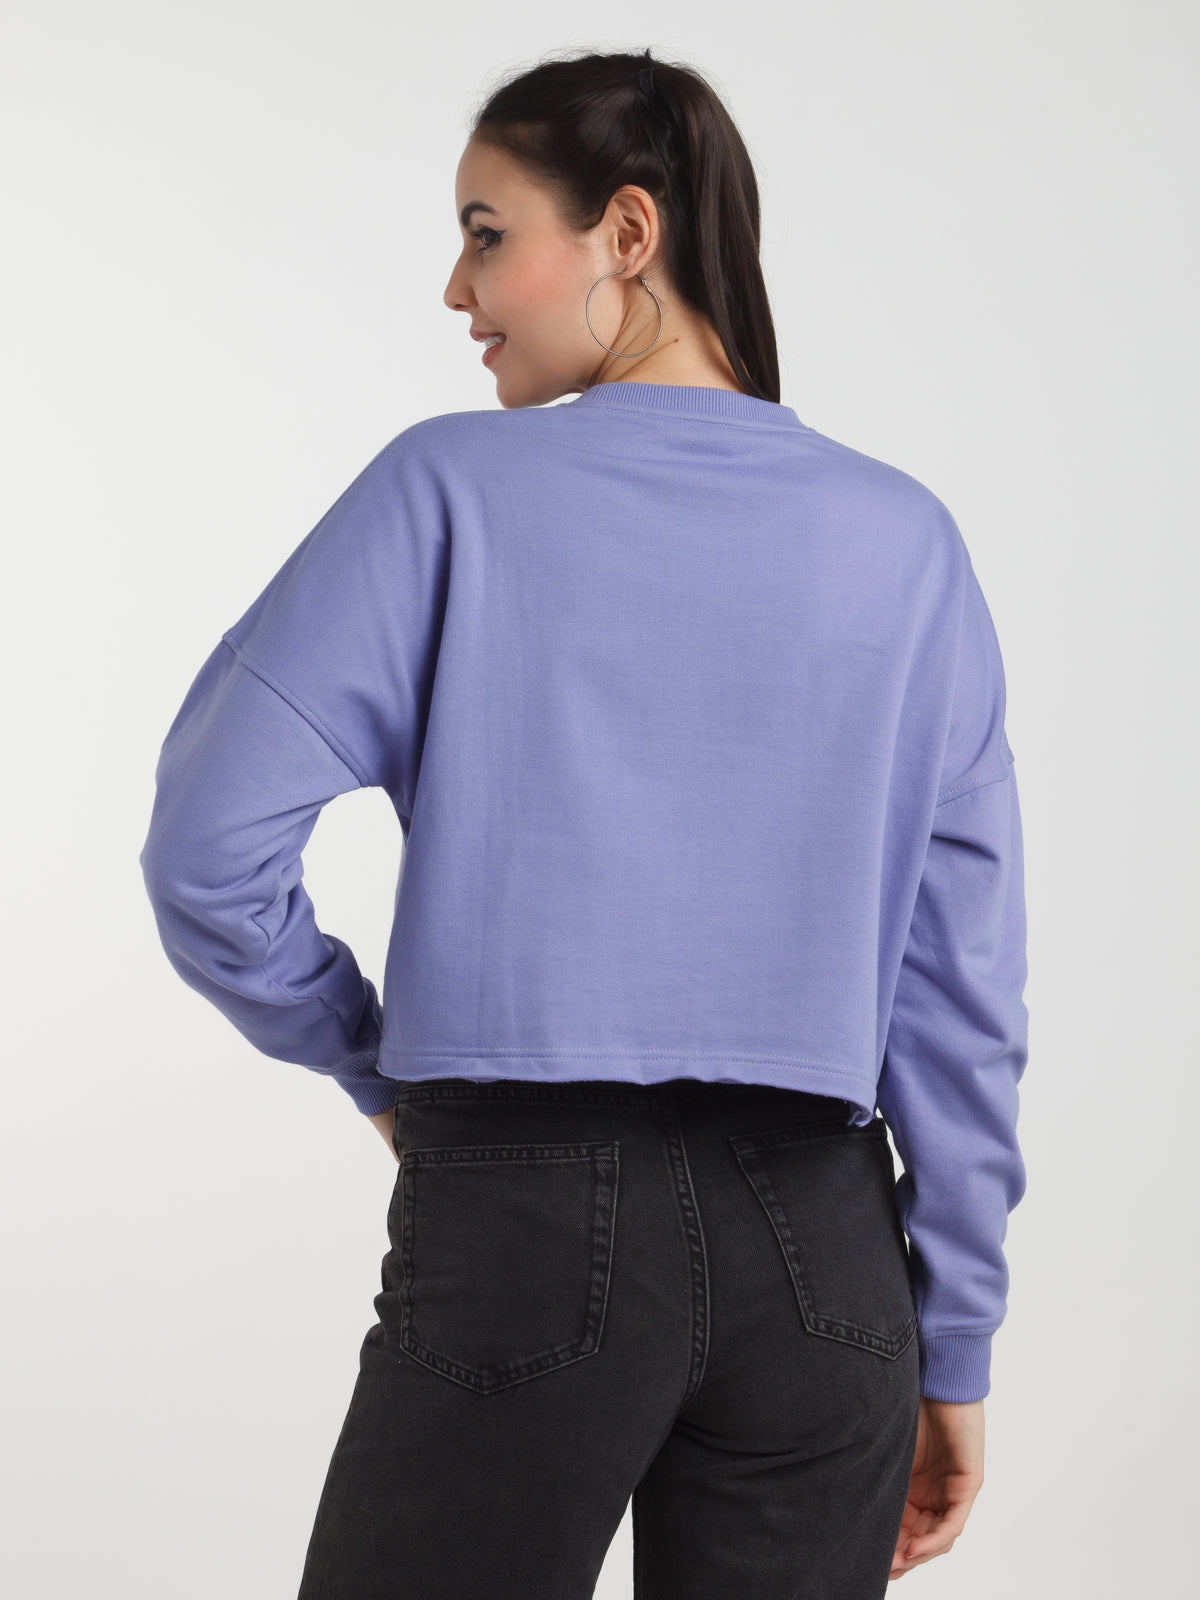 Lavender Printed Sweatshirt For Women